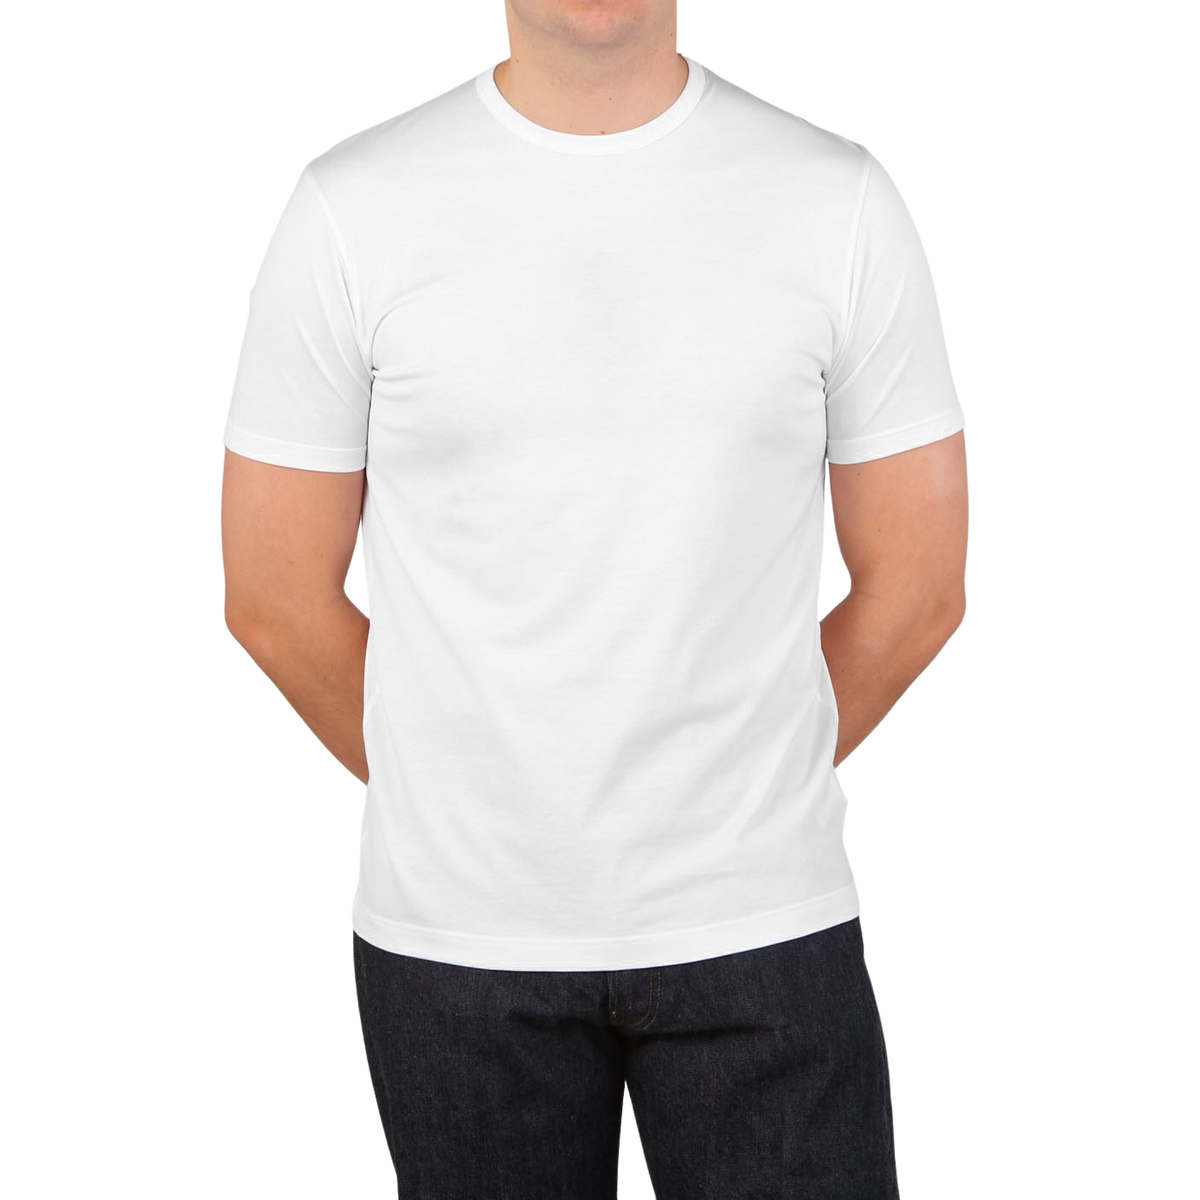 Sunspel White Classic Cotton T-Shirt Front1